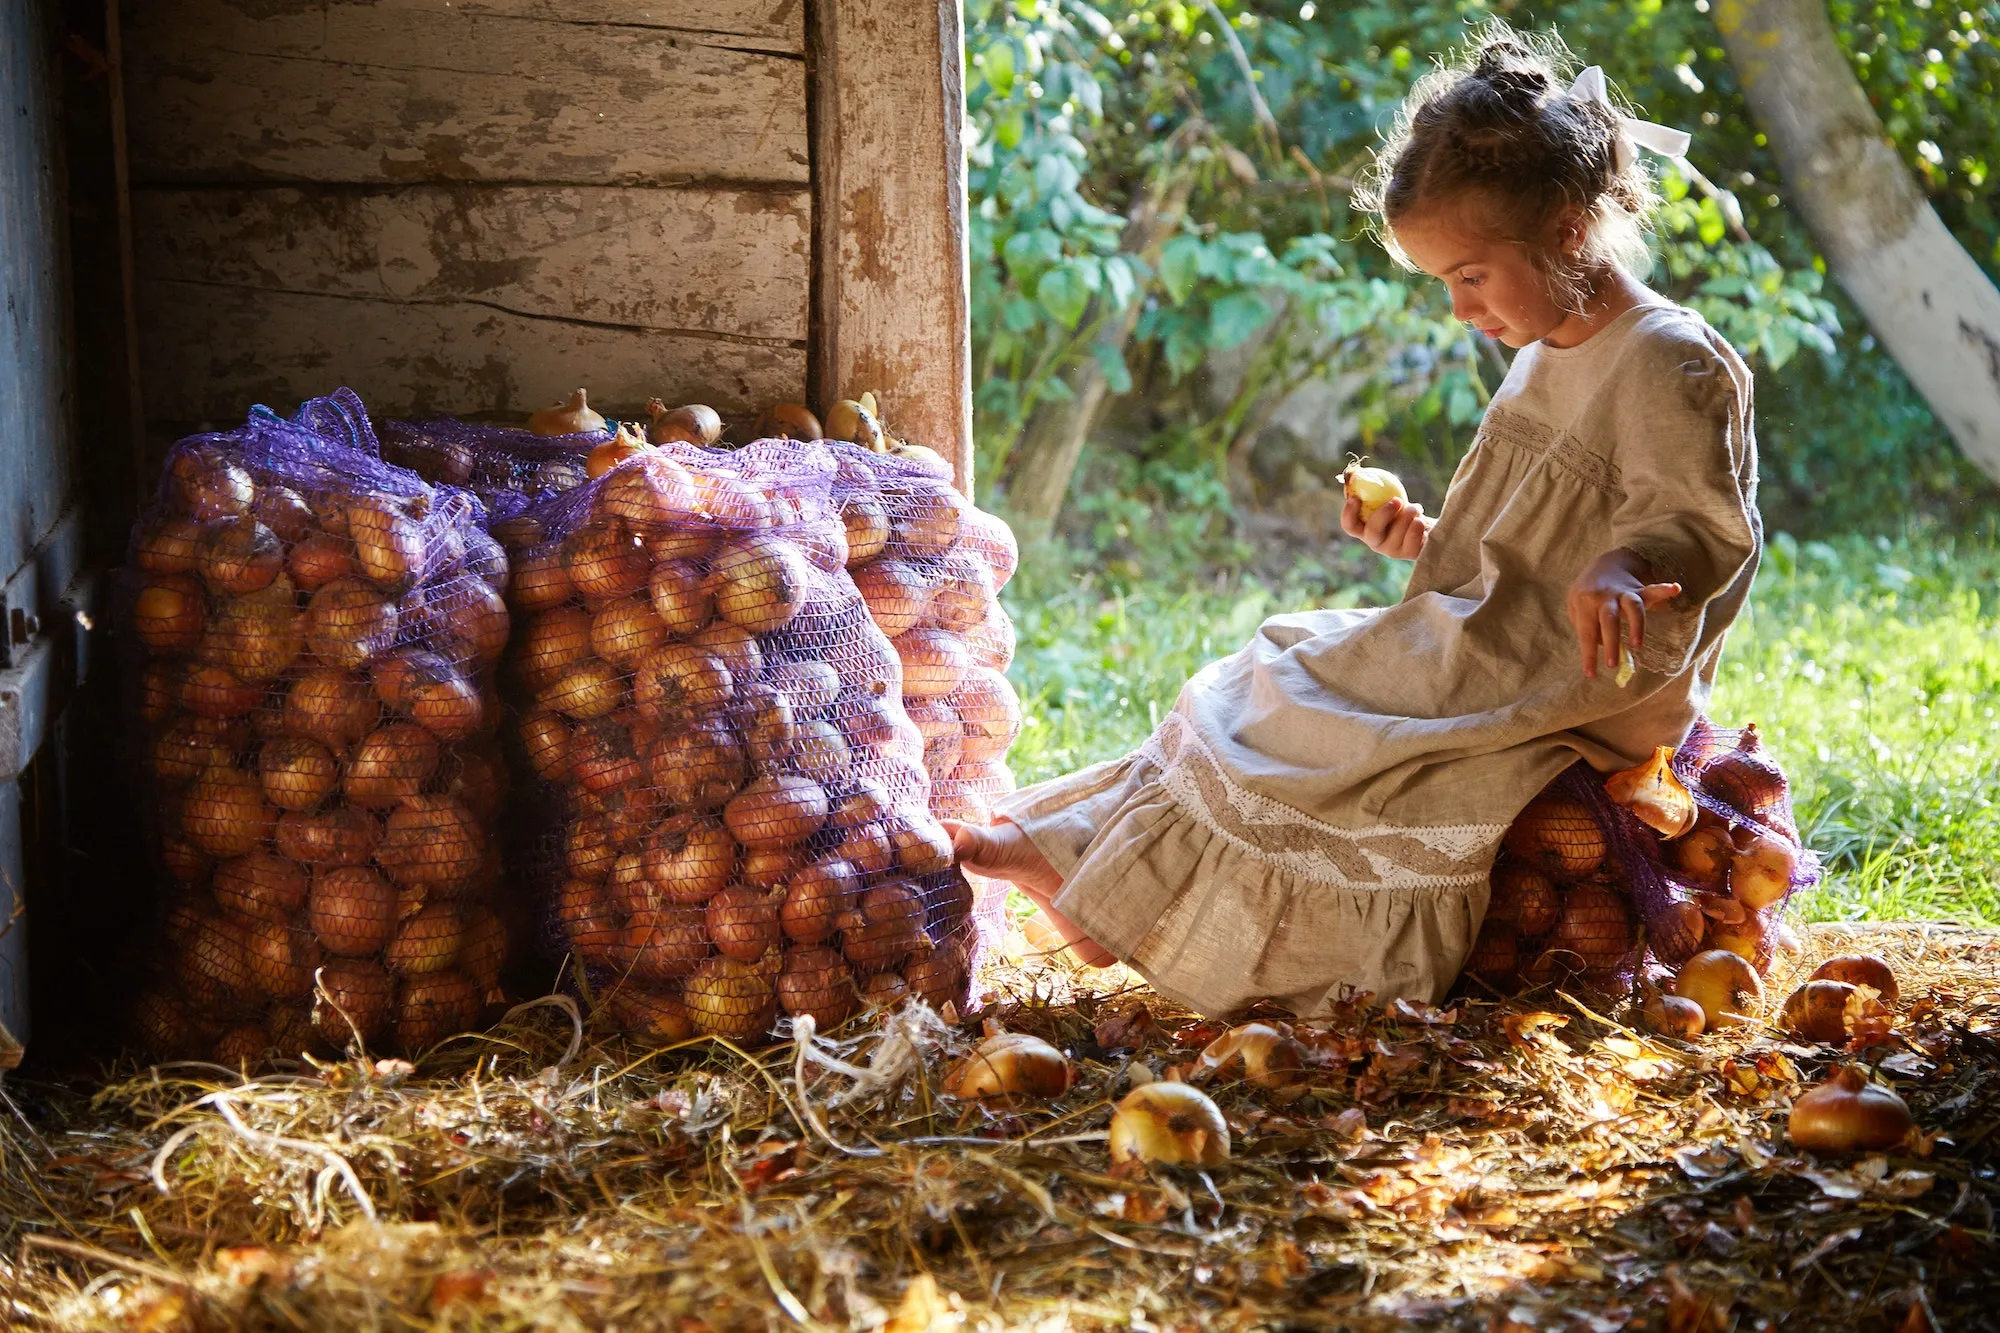 jeune fille regarde un sac d'oignon dans une grange